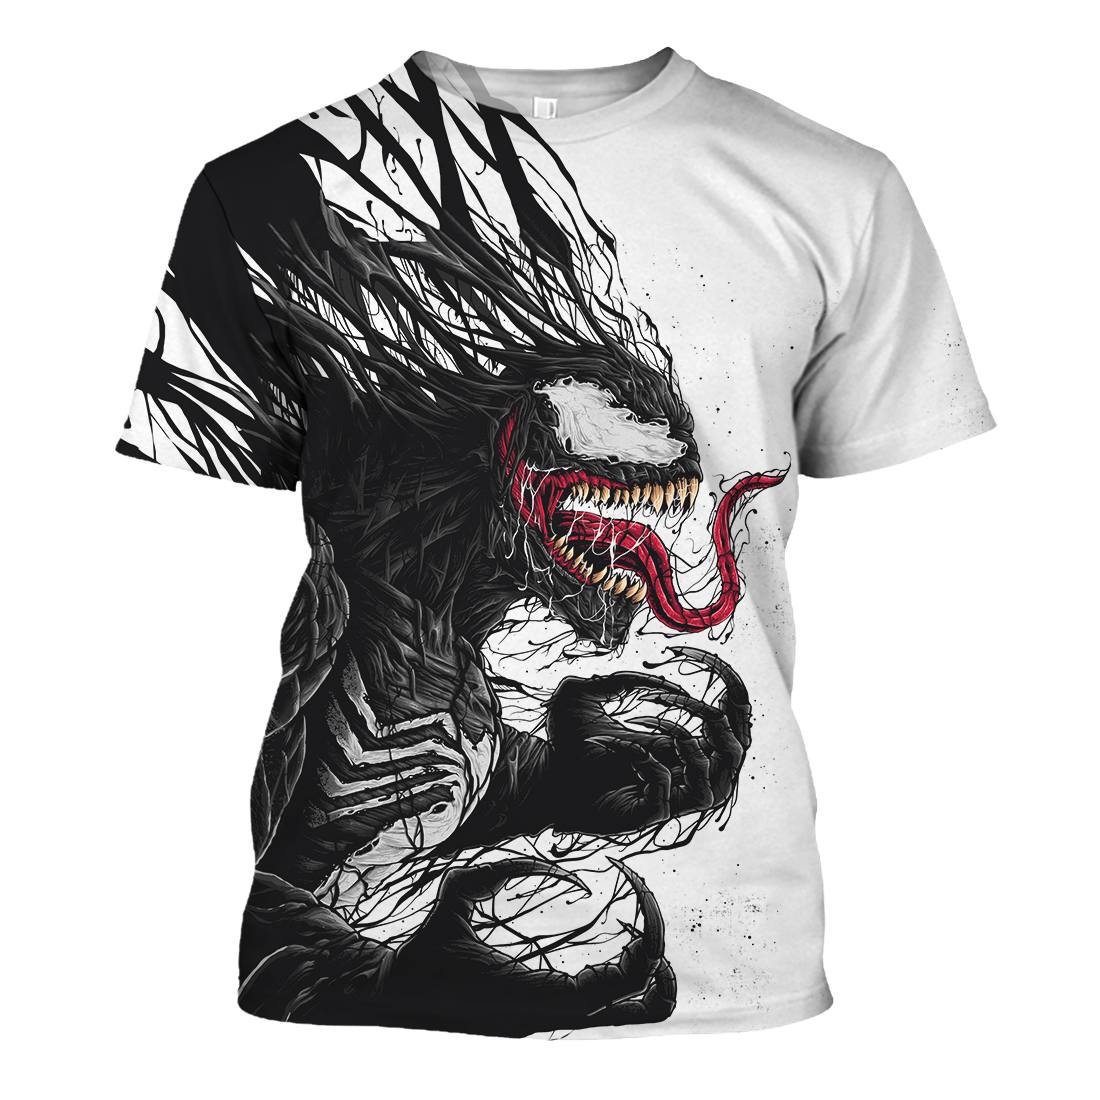 Unifinz Venom Hoodie Black & White Adult New Carnage T Shirt MV Venom Shirt Sweater Tank 2025